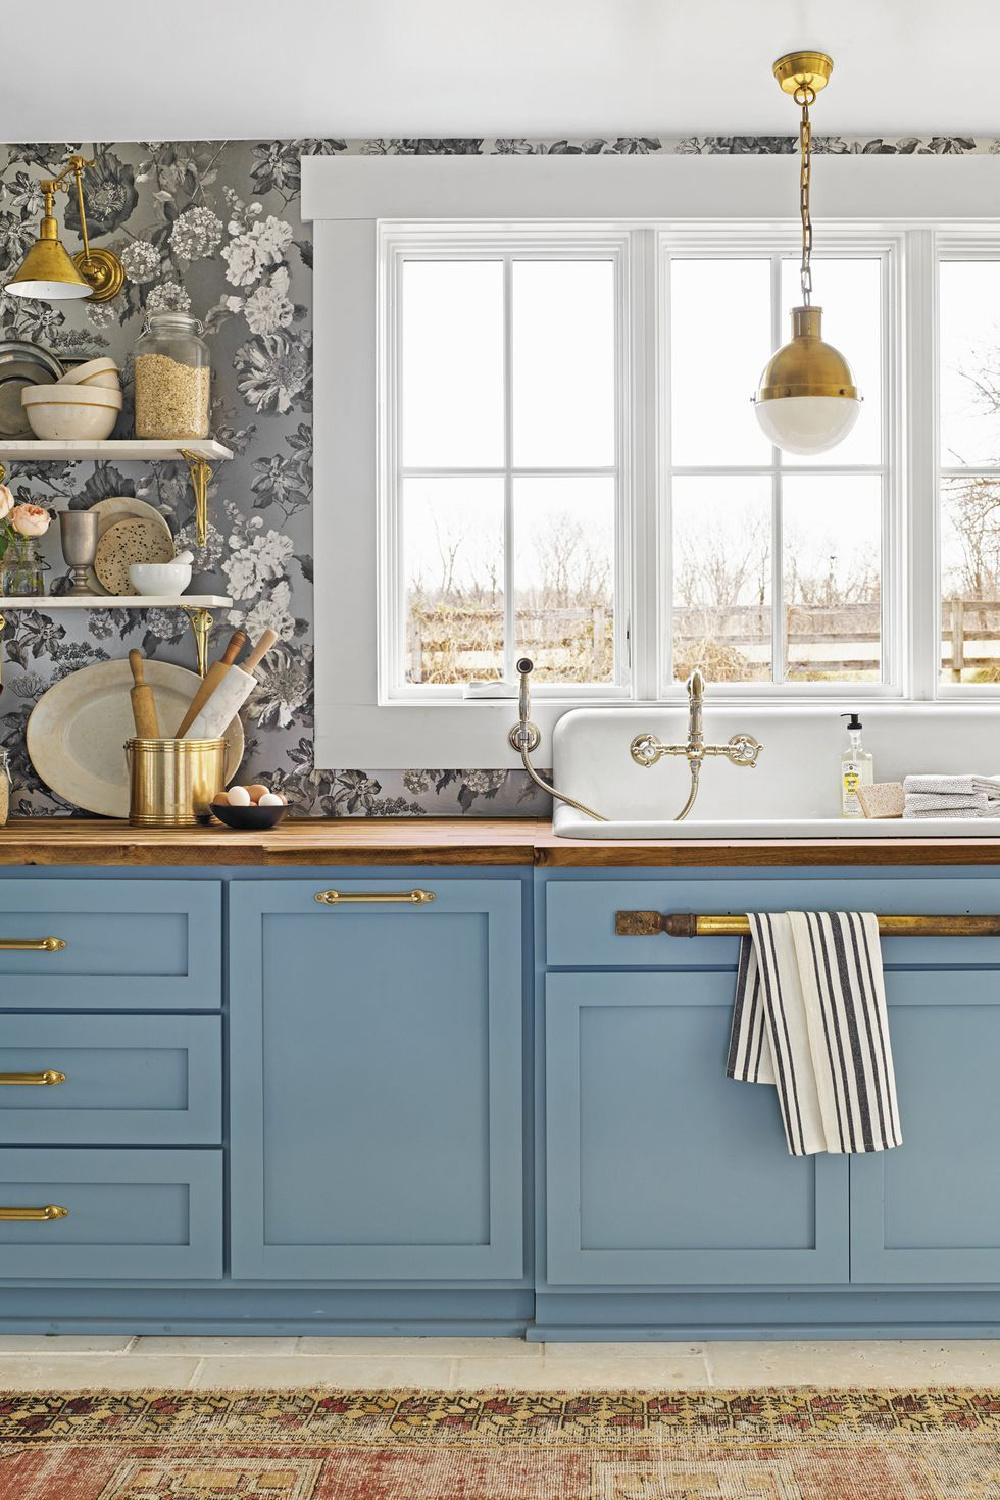 Benjamin Moore's Stratton Blue kitchen cabinets